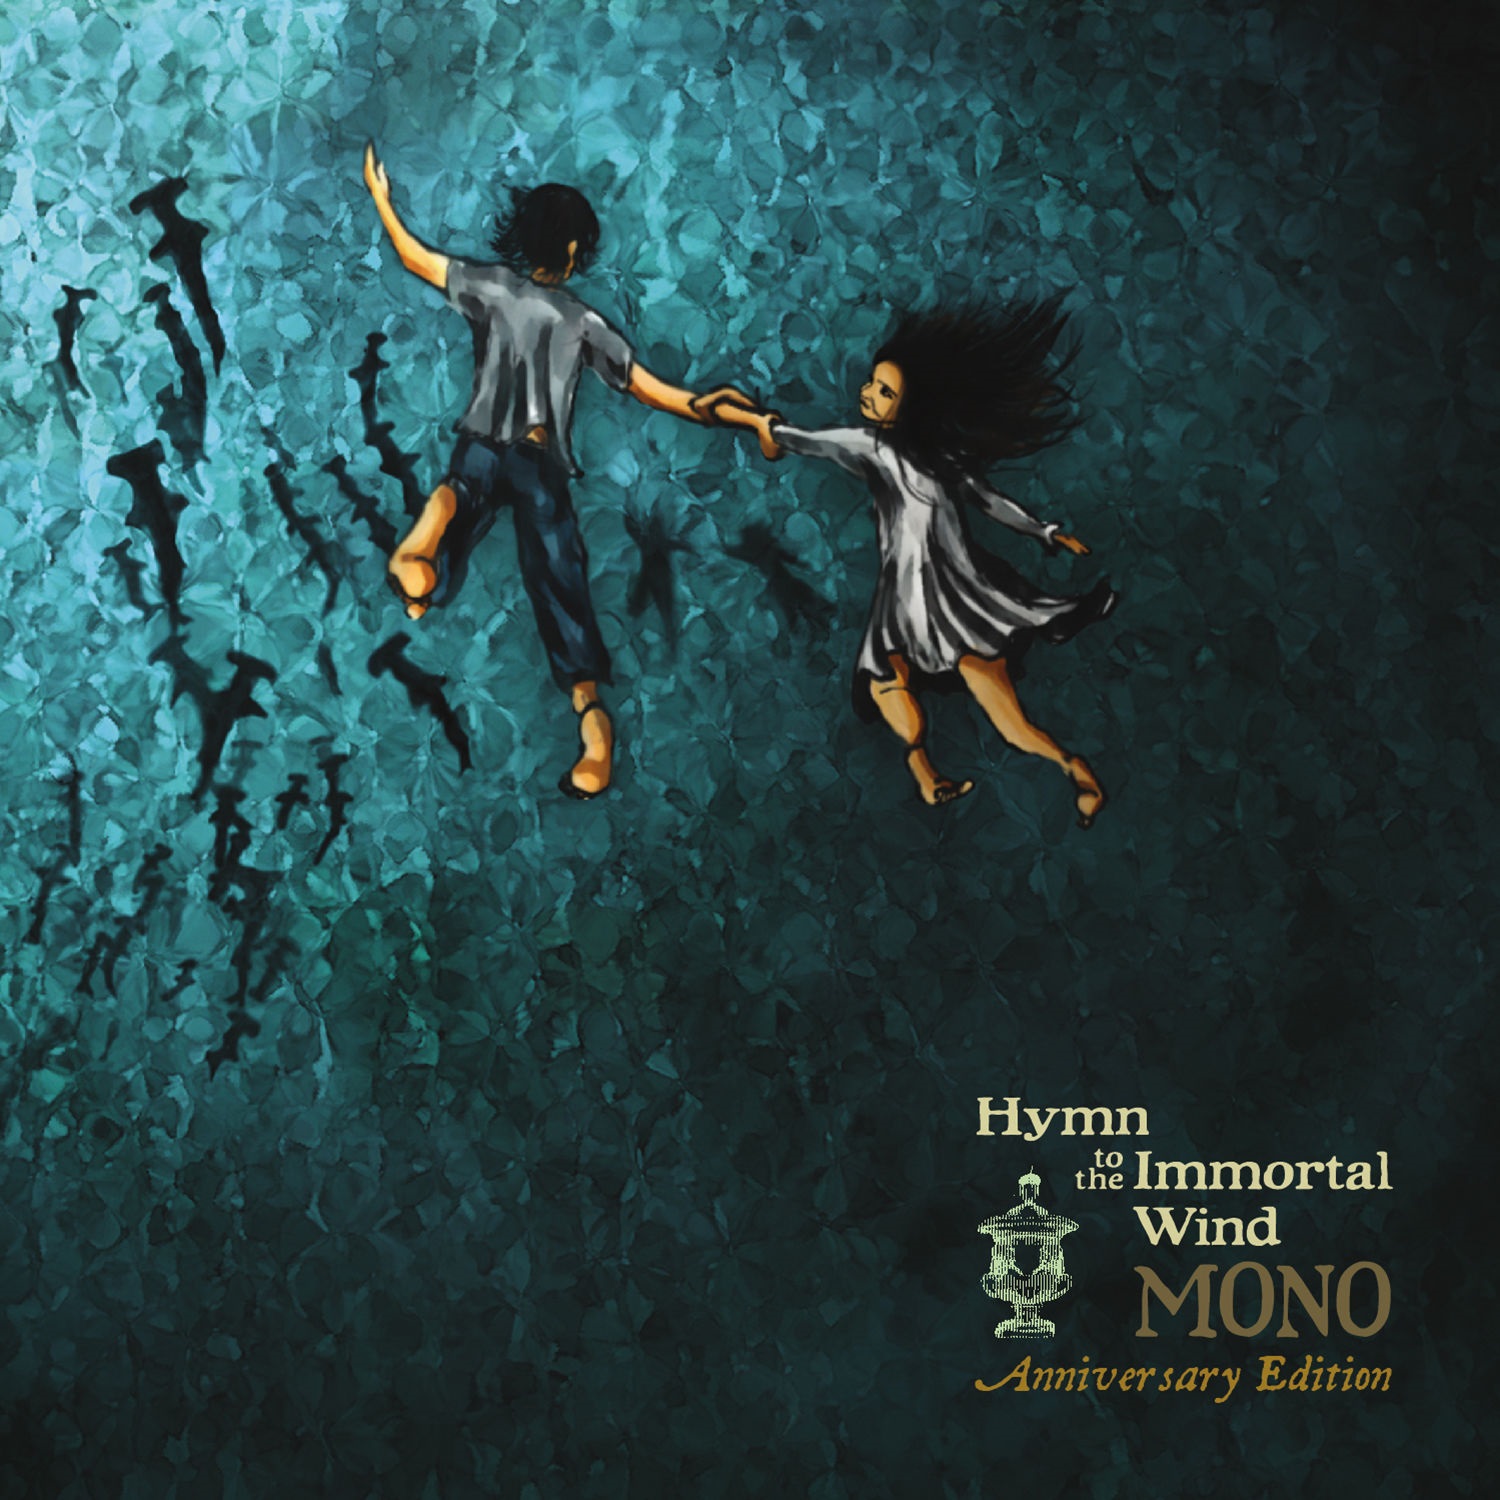 Mono - Hymn to the Immortal Wind (Anniversary Edition) (2009/2019) [FLAC 24bit/44,1kHz]